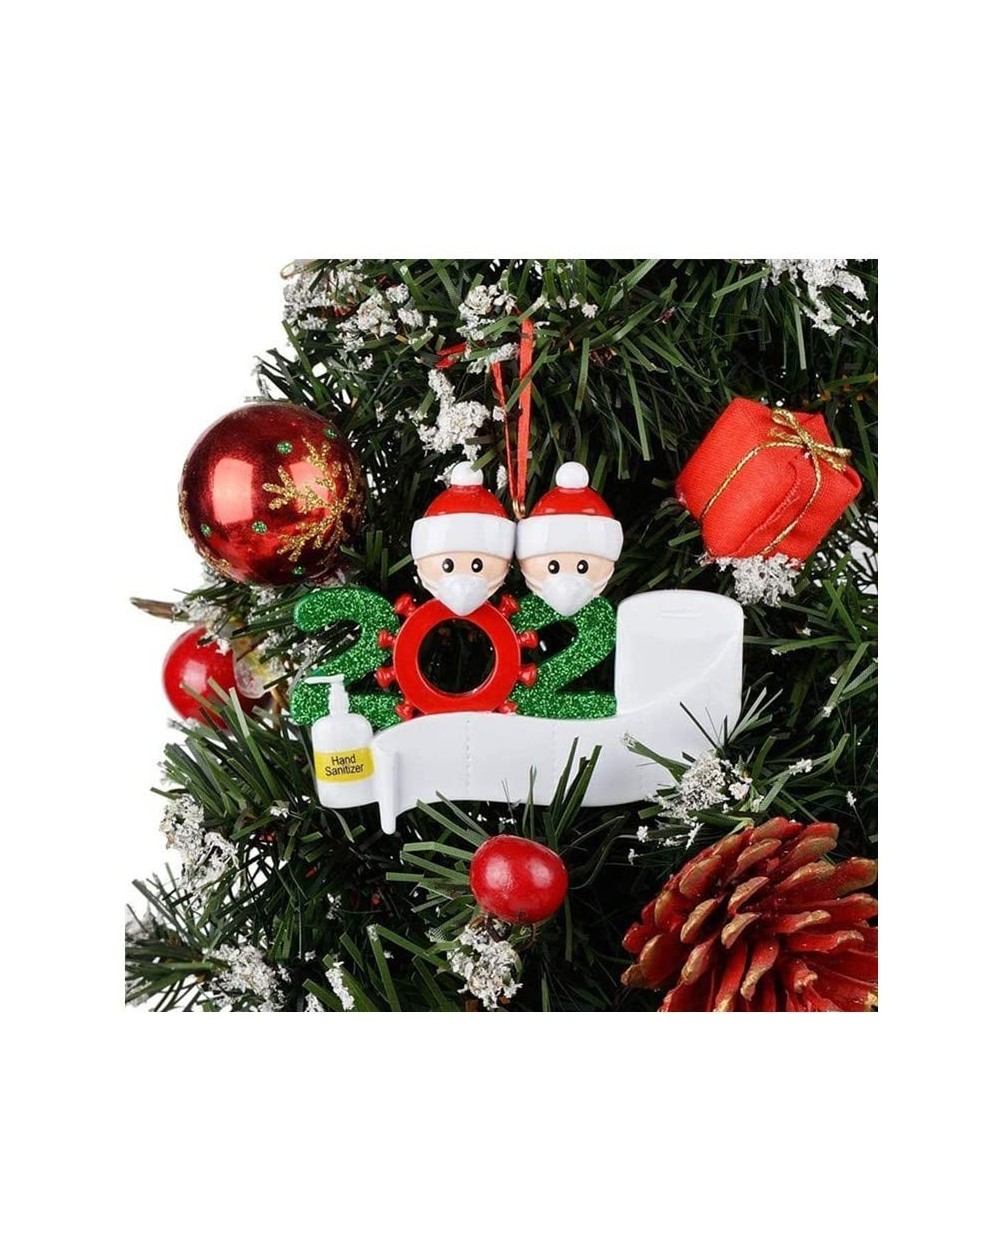 Ornaments Personalized Name Christmas Ornament Kit with Mask- 2020 Quarantine Survivor Family Christmas Decorating Kit Creati...